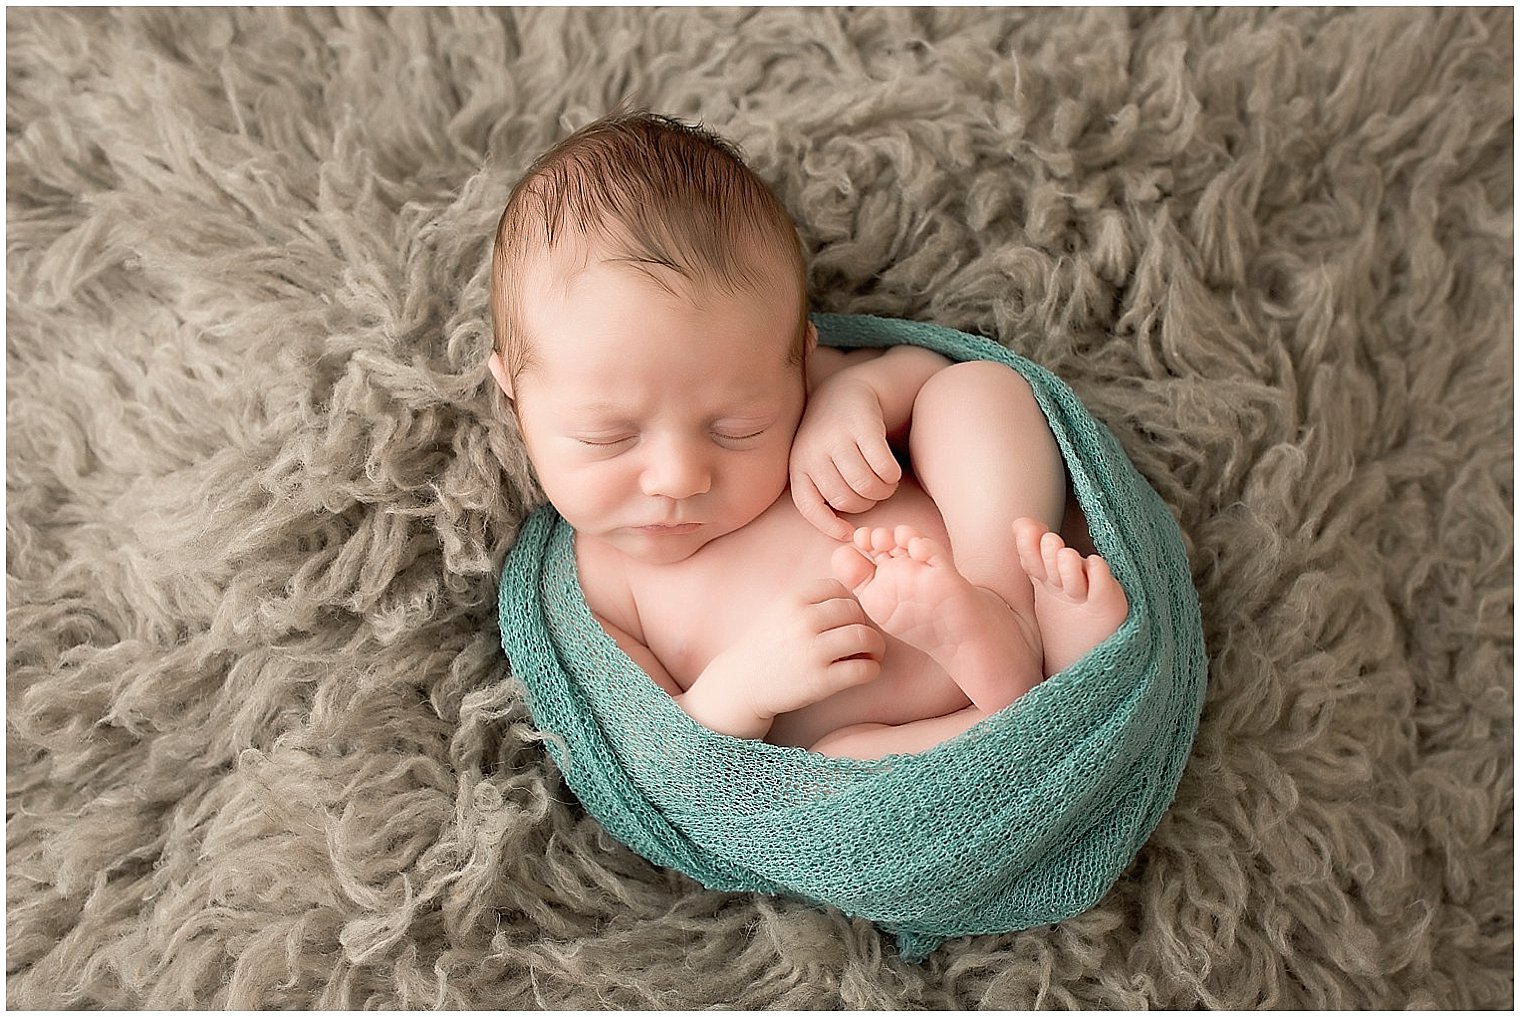 Gray and turquoise newborn photo | Photo by Idalia Photography